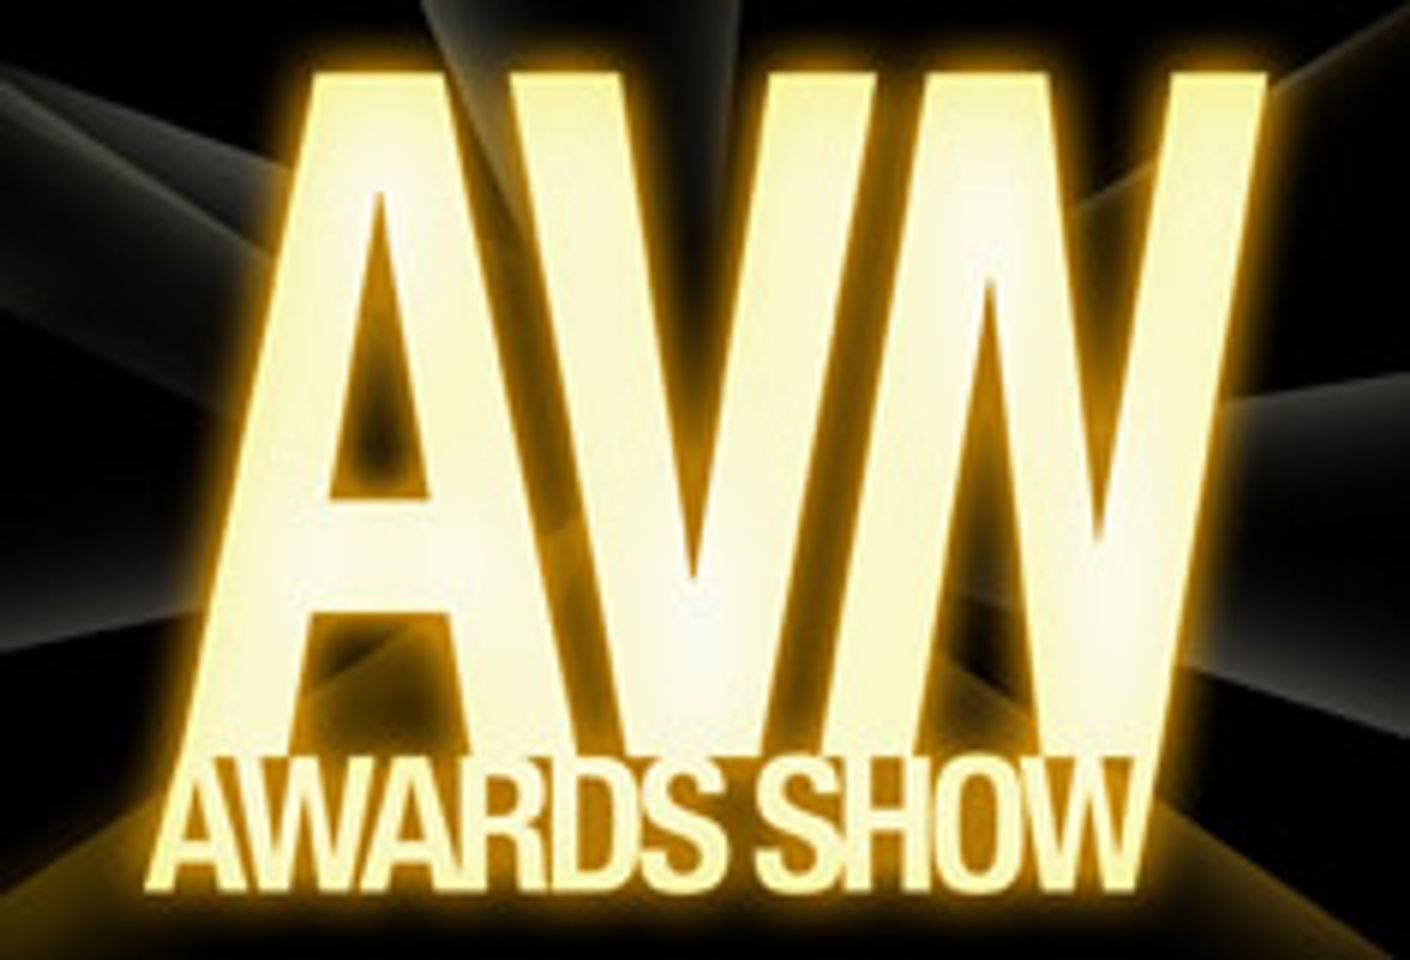 Playboy TV Premieres AVN Awards Show Tonight